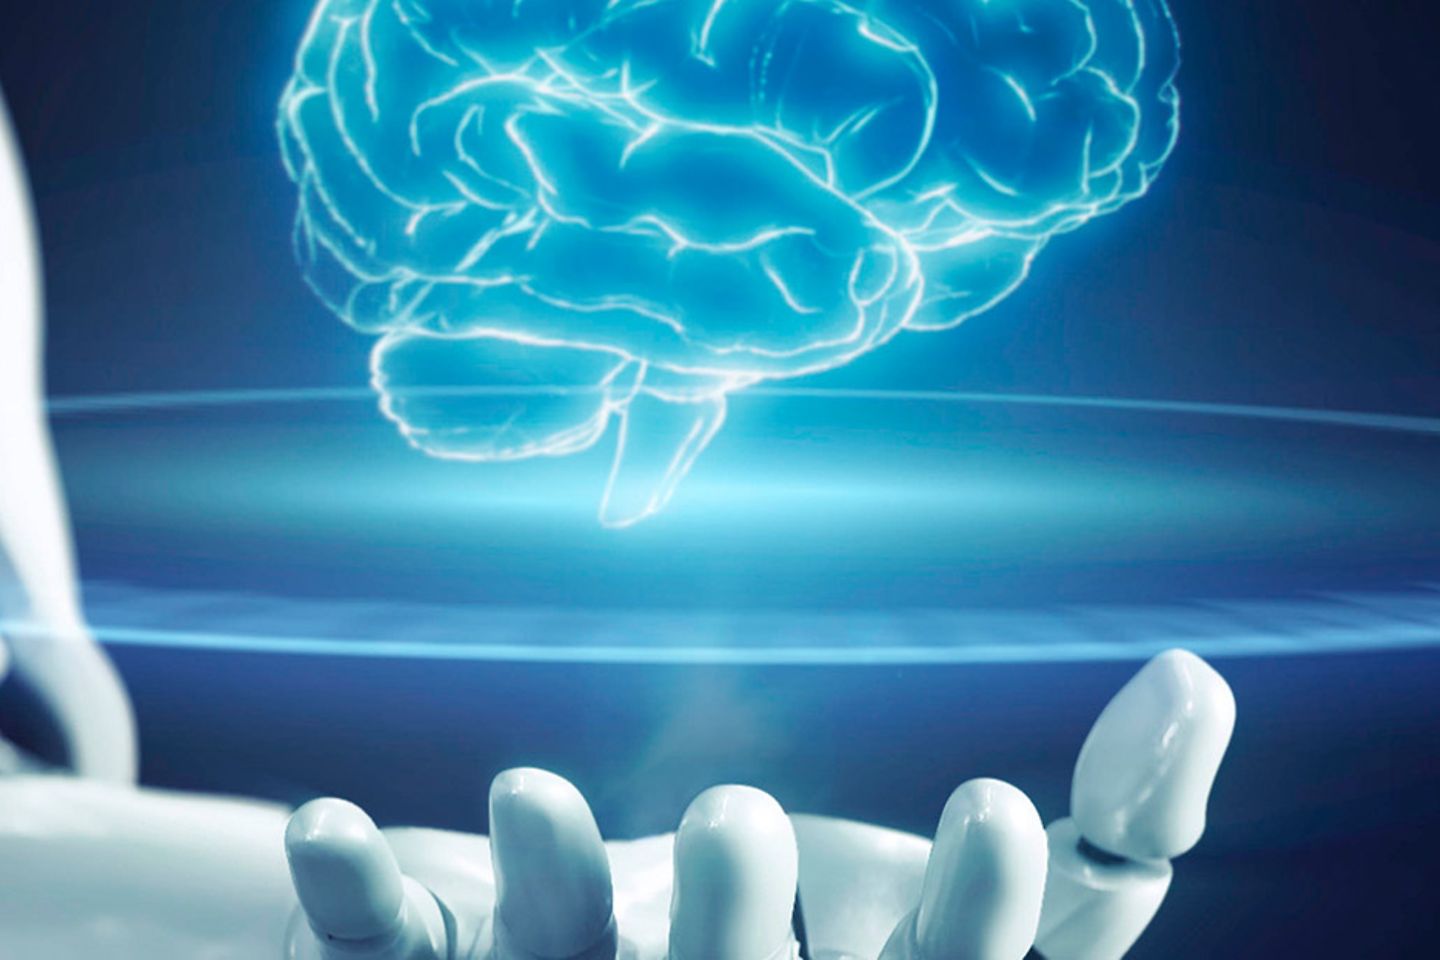 A virtual representation of a brain hovers above a robot arm.